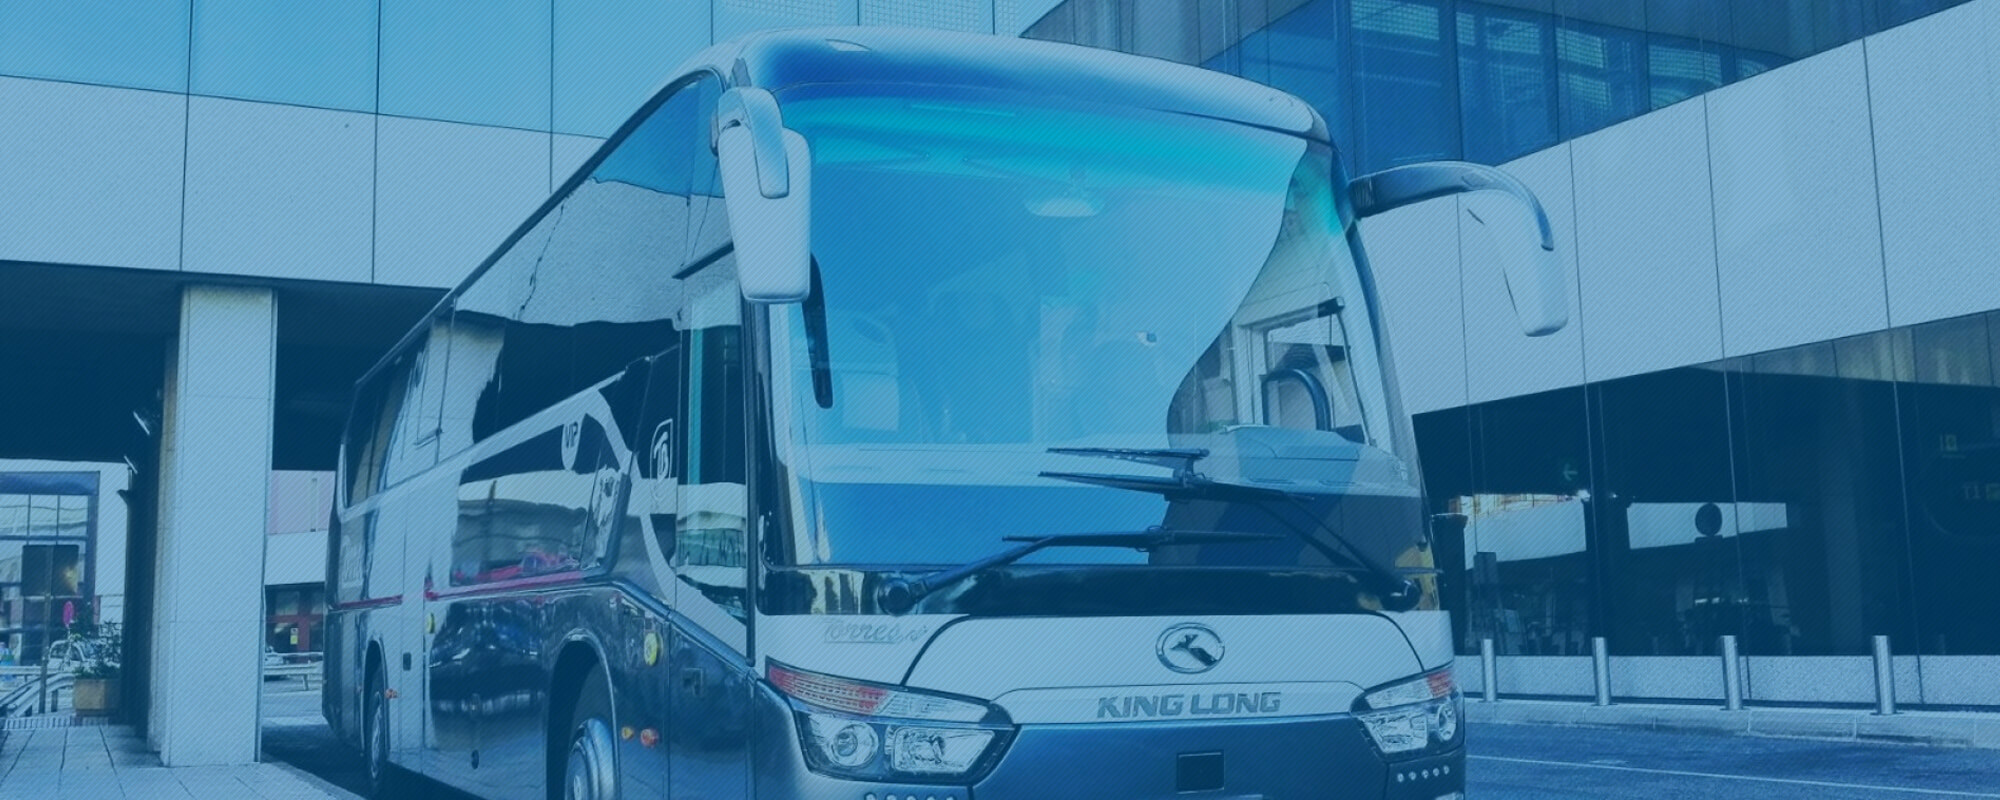 Minibus Hire Services